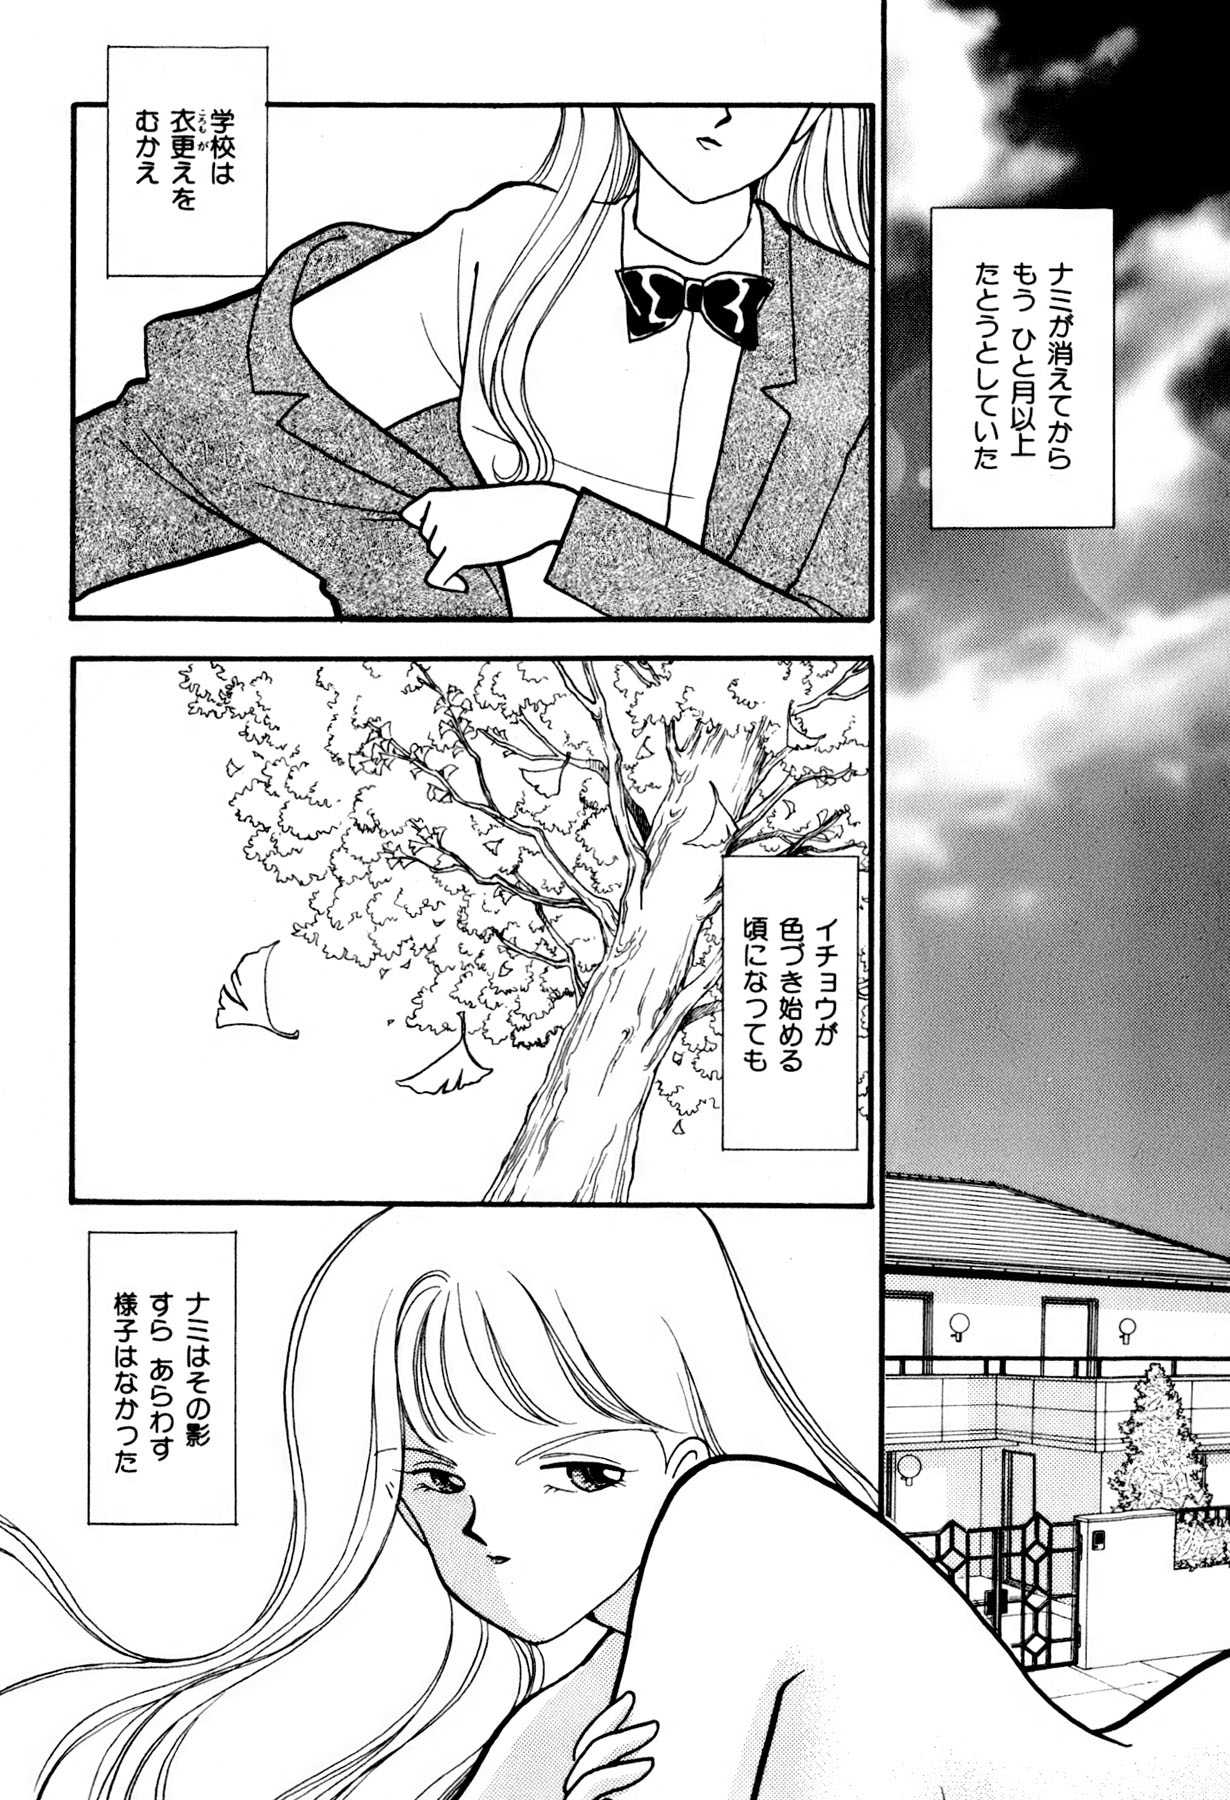 [Arimura Shinobu] Sprite Vol. 10 [有村しのぶ] SPRITE スプライト 第10巻